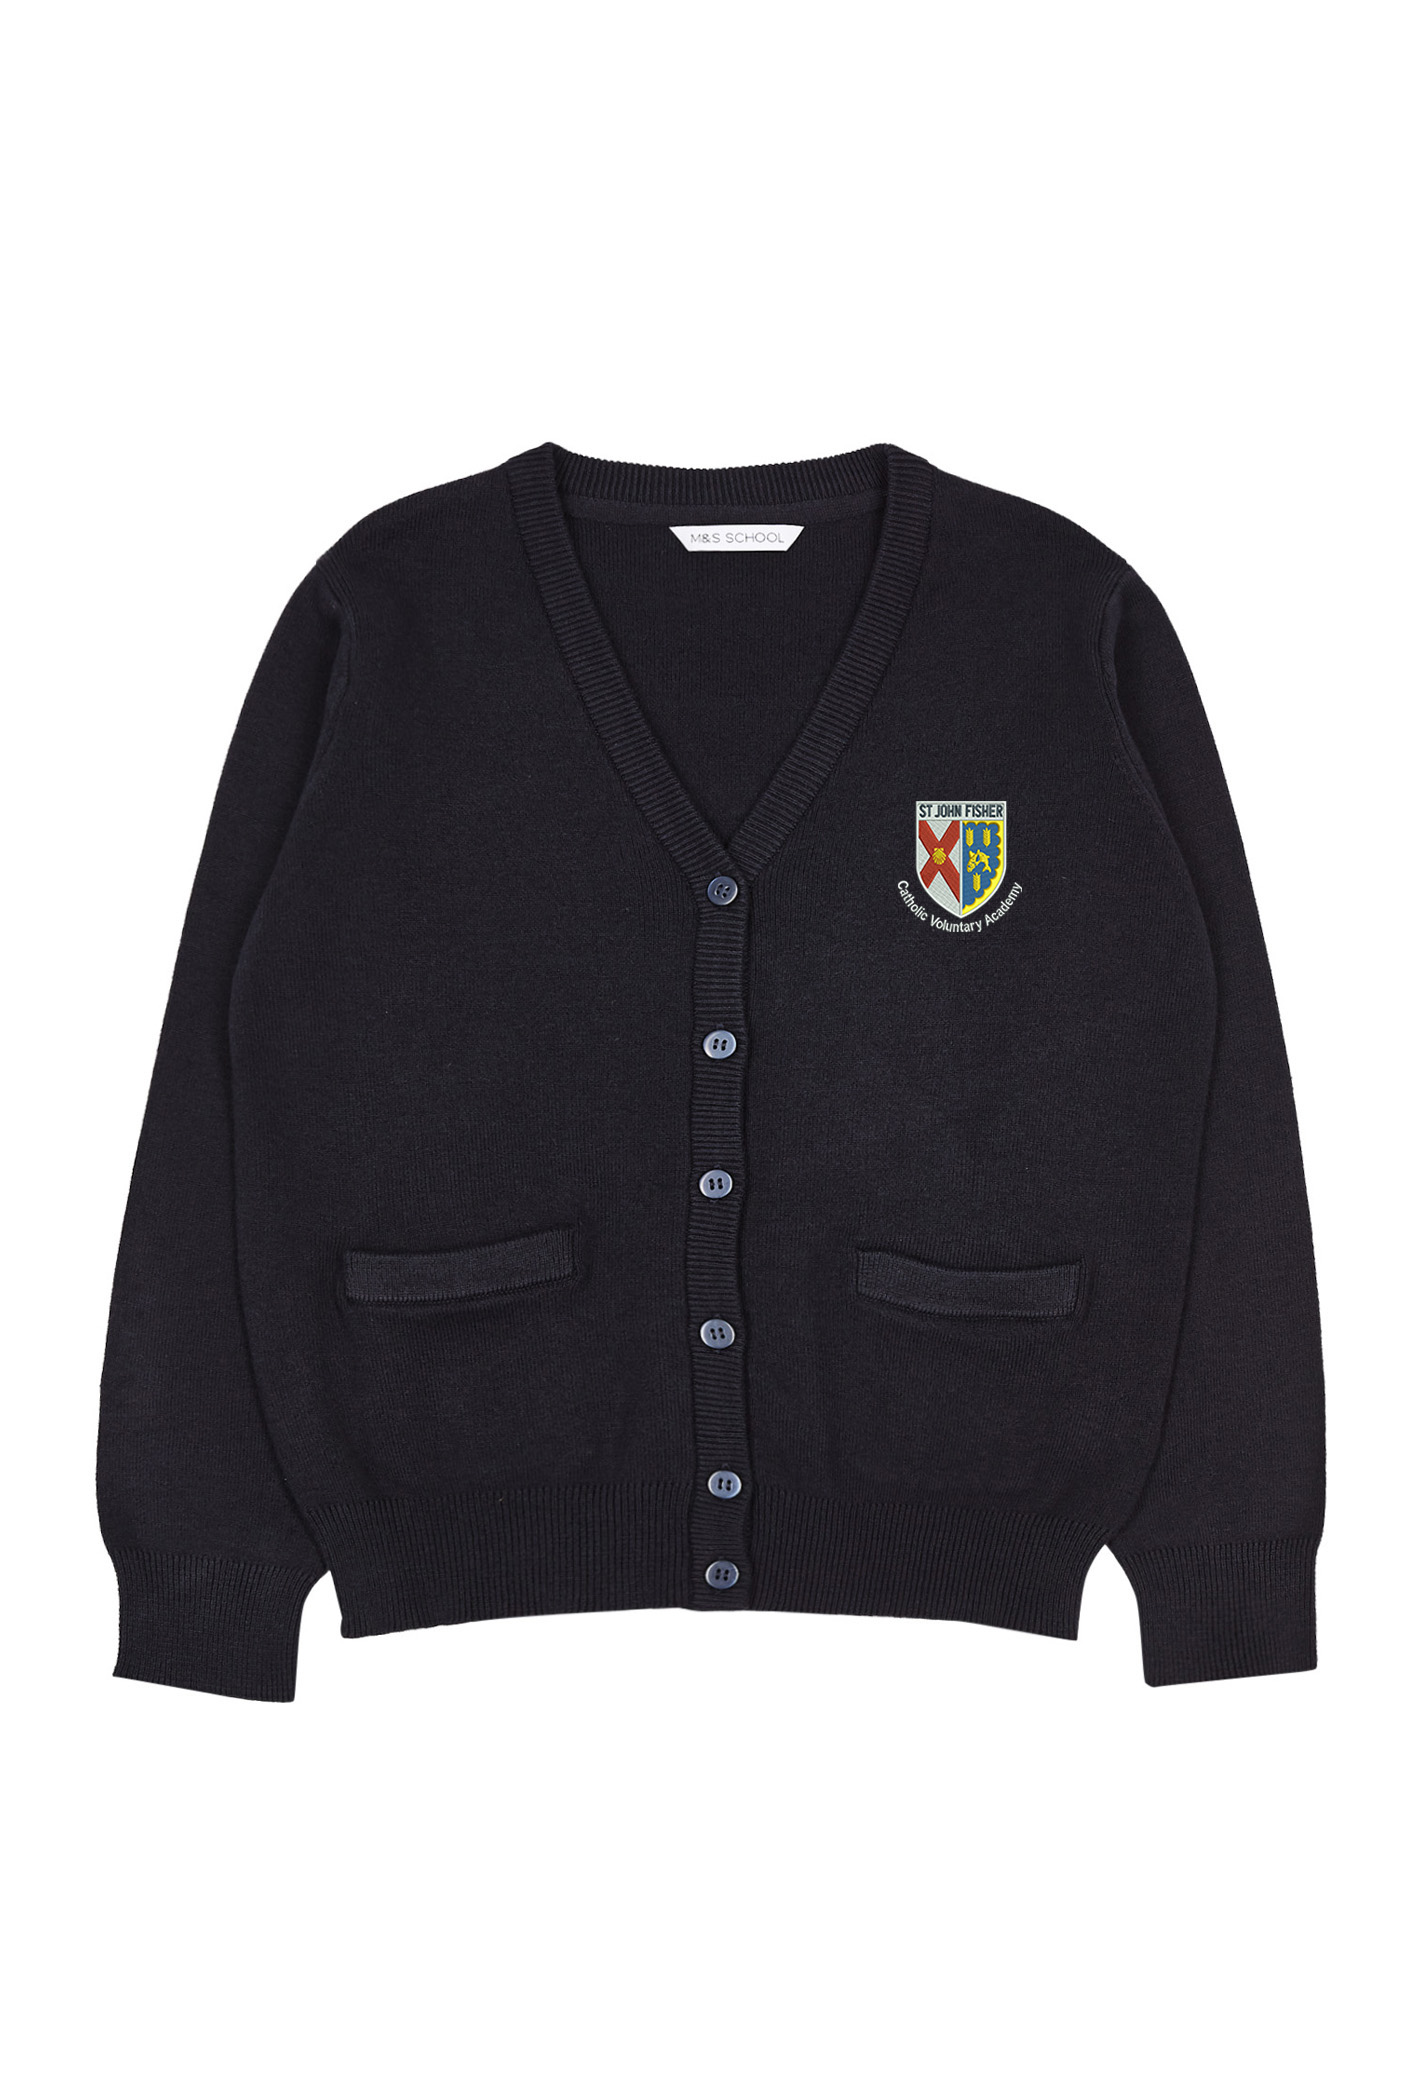 St John Fisher Catholic Voluntary Academy Knitted Cardigan